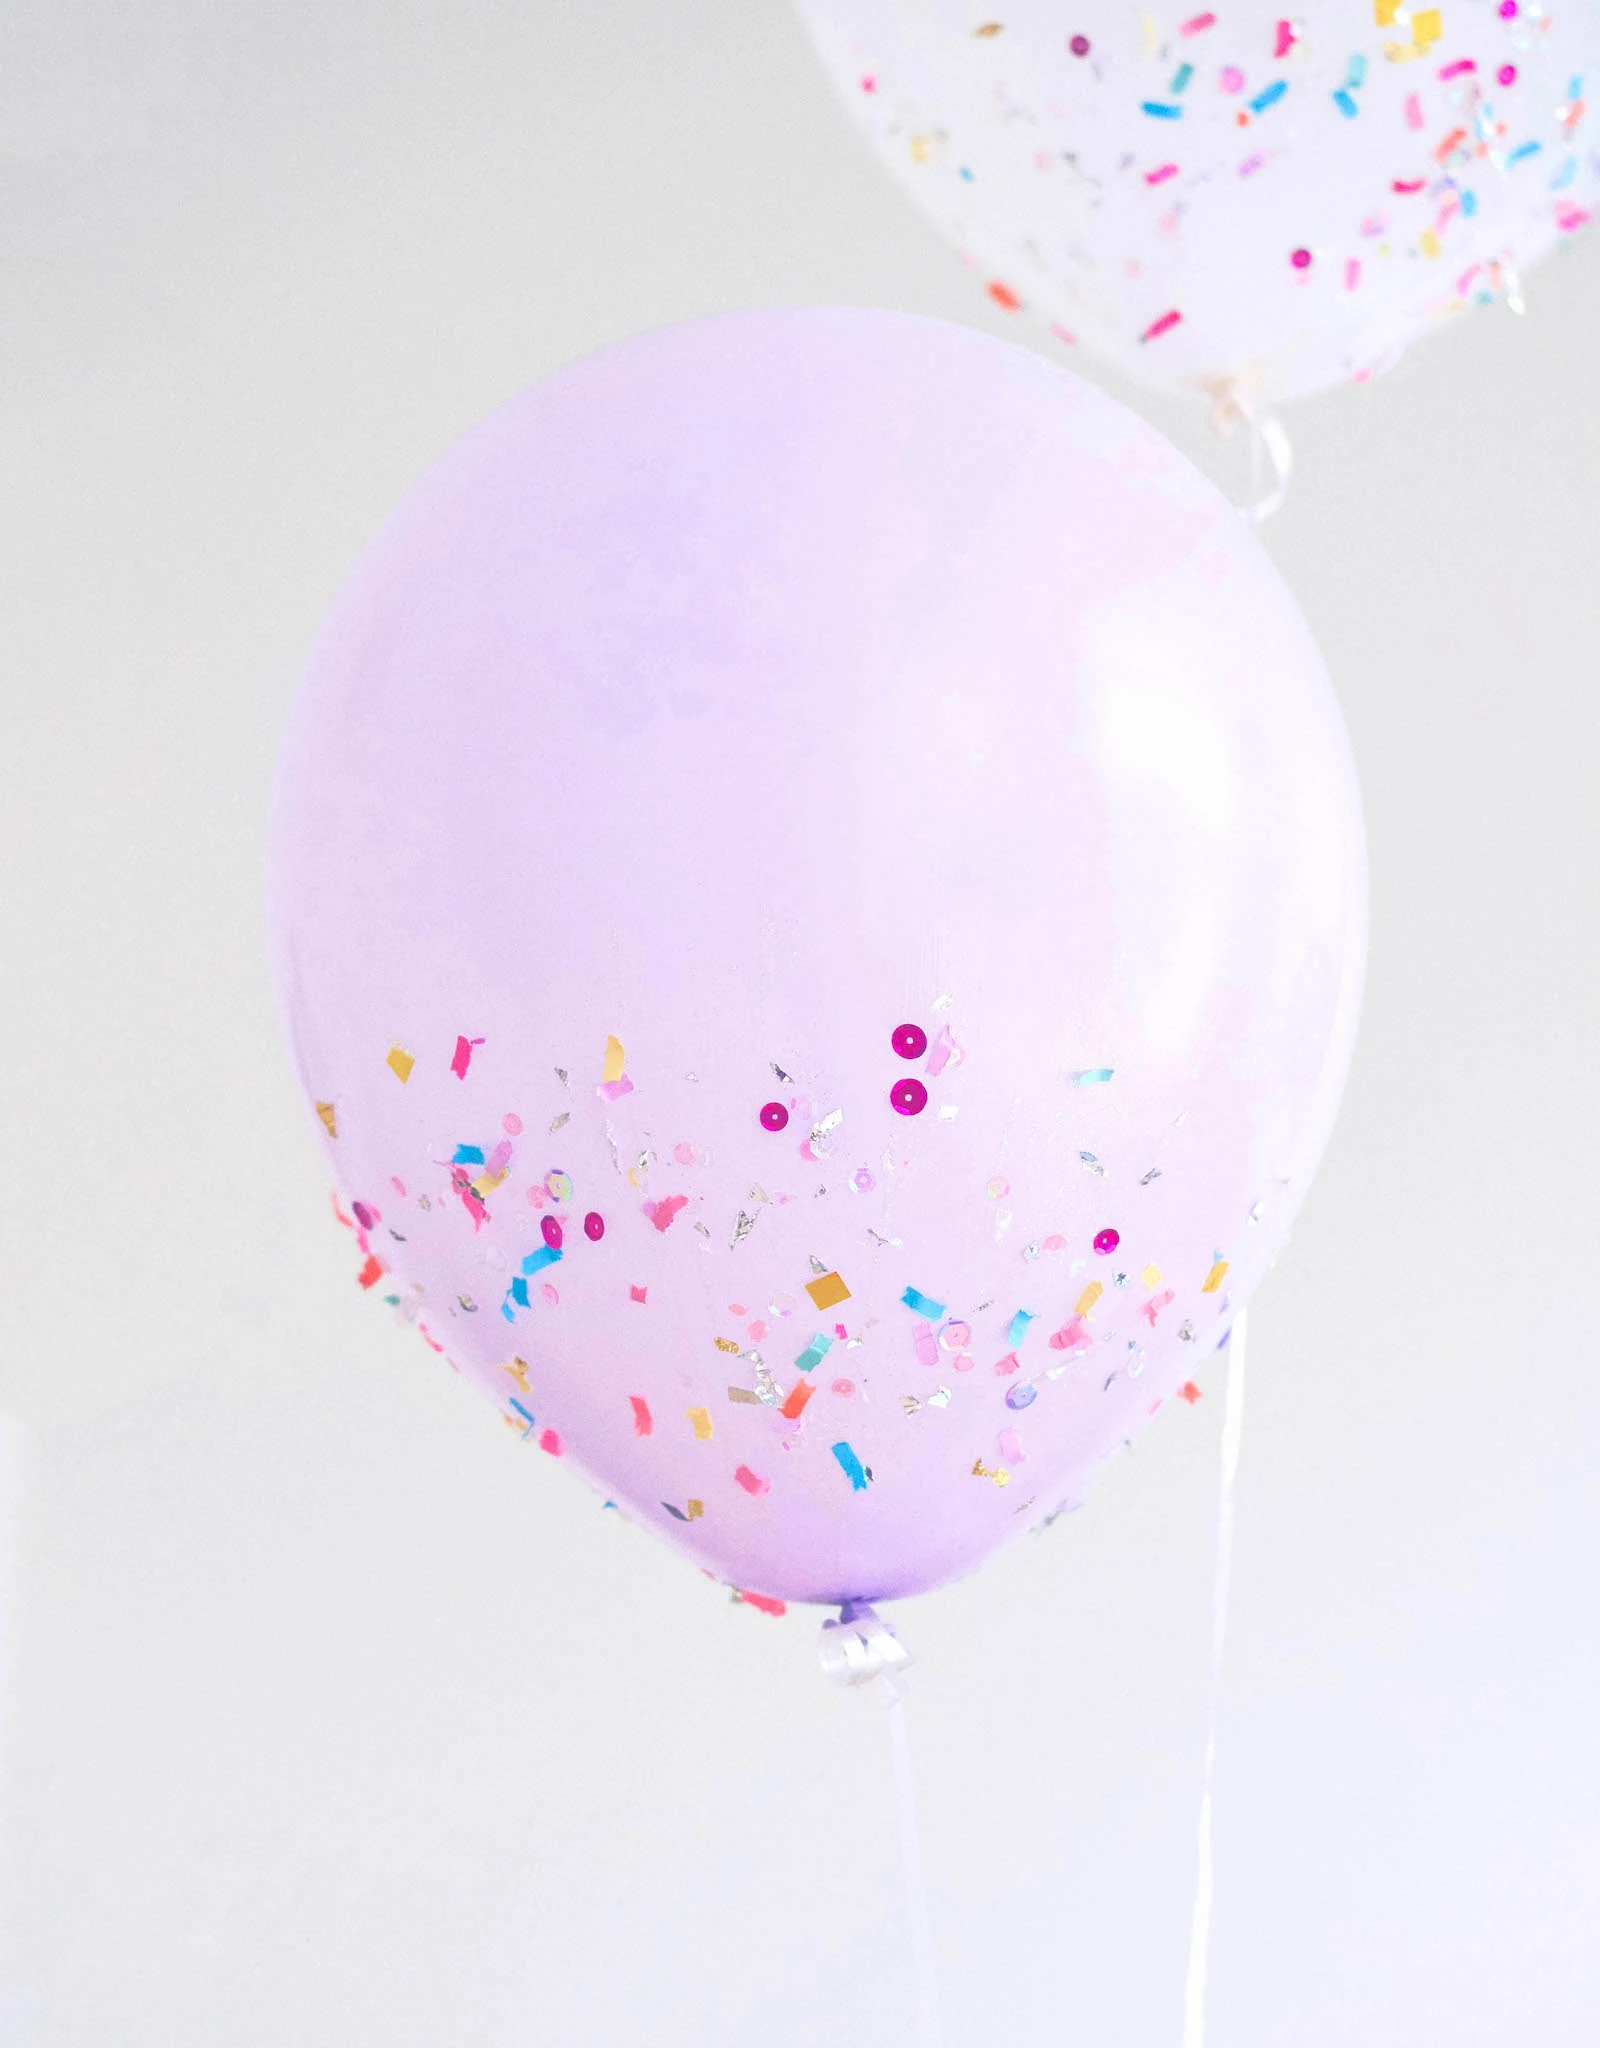 Confetti sprinkled onto a balloon